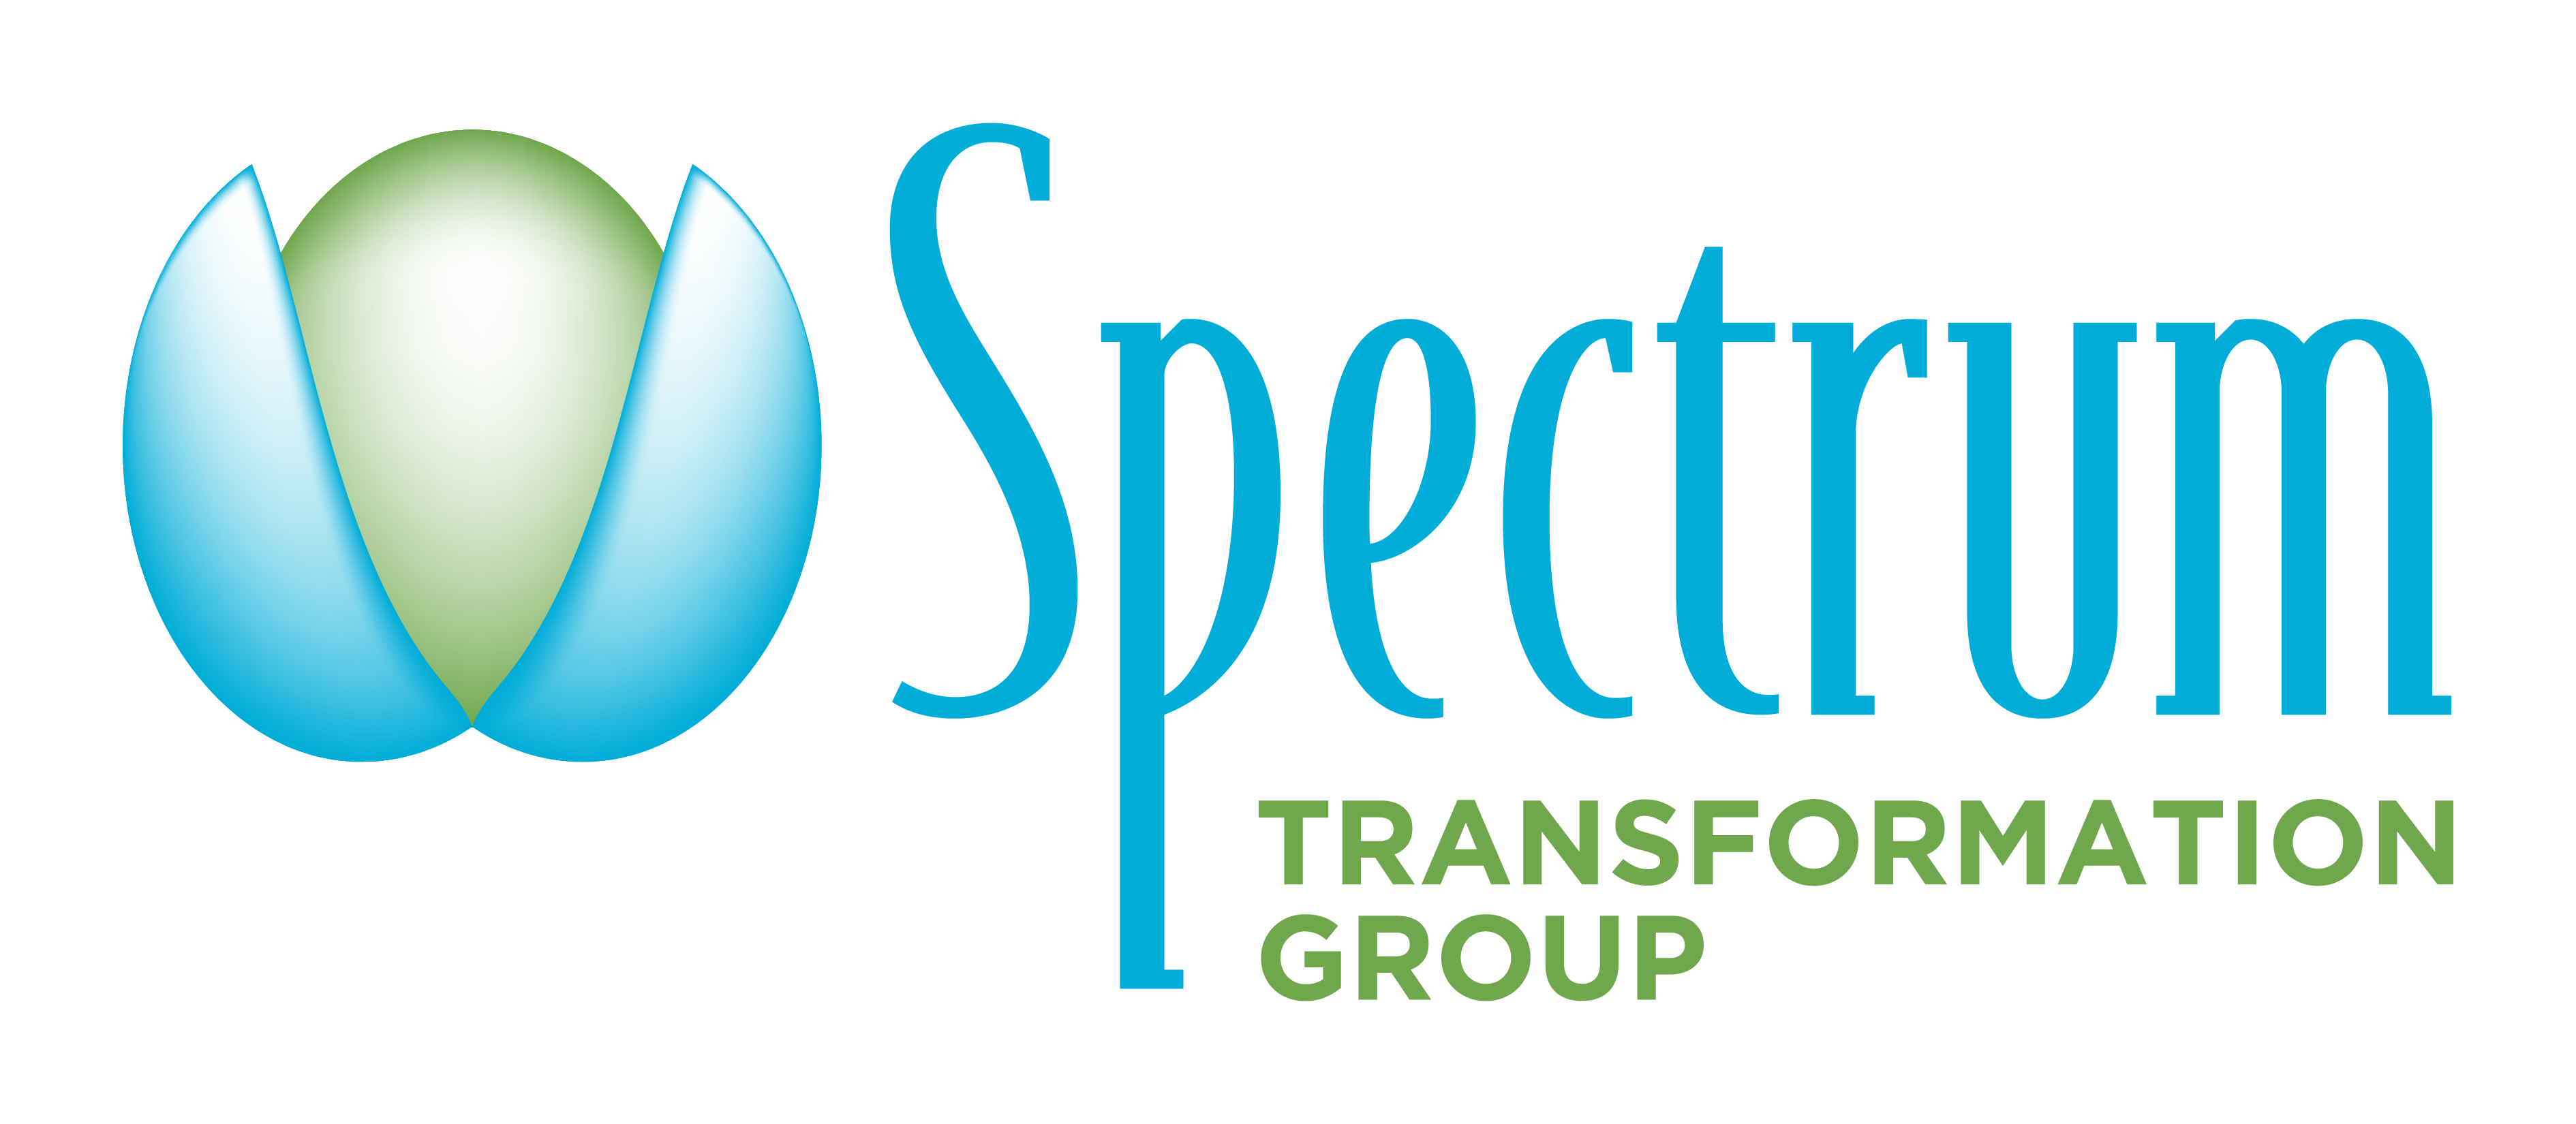 Spectrum Transformation Group Company Logo